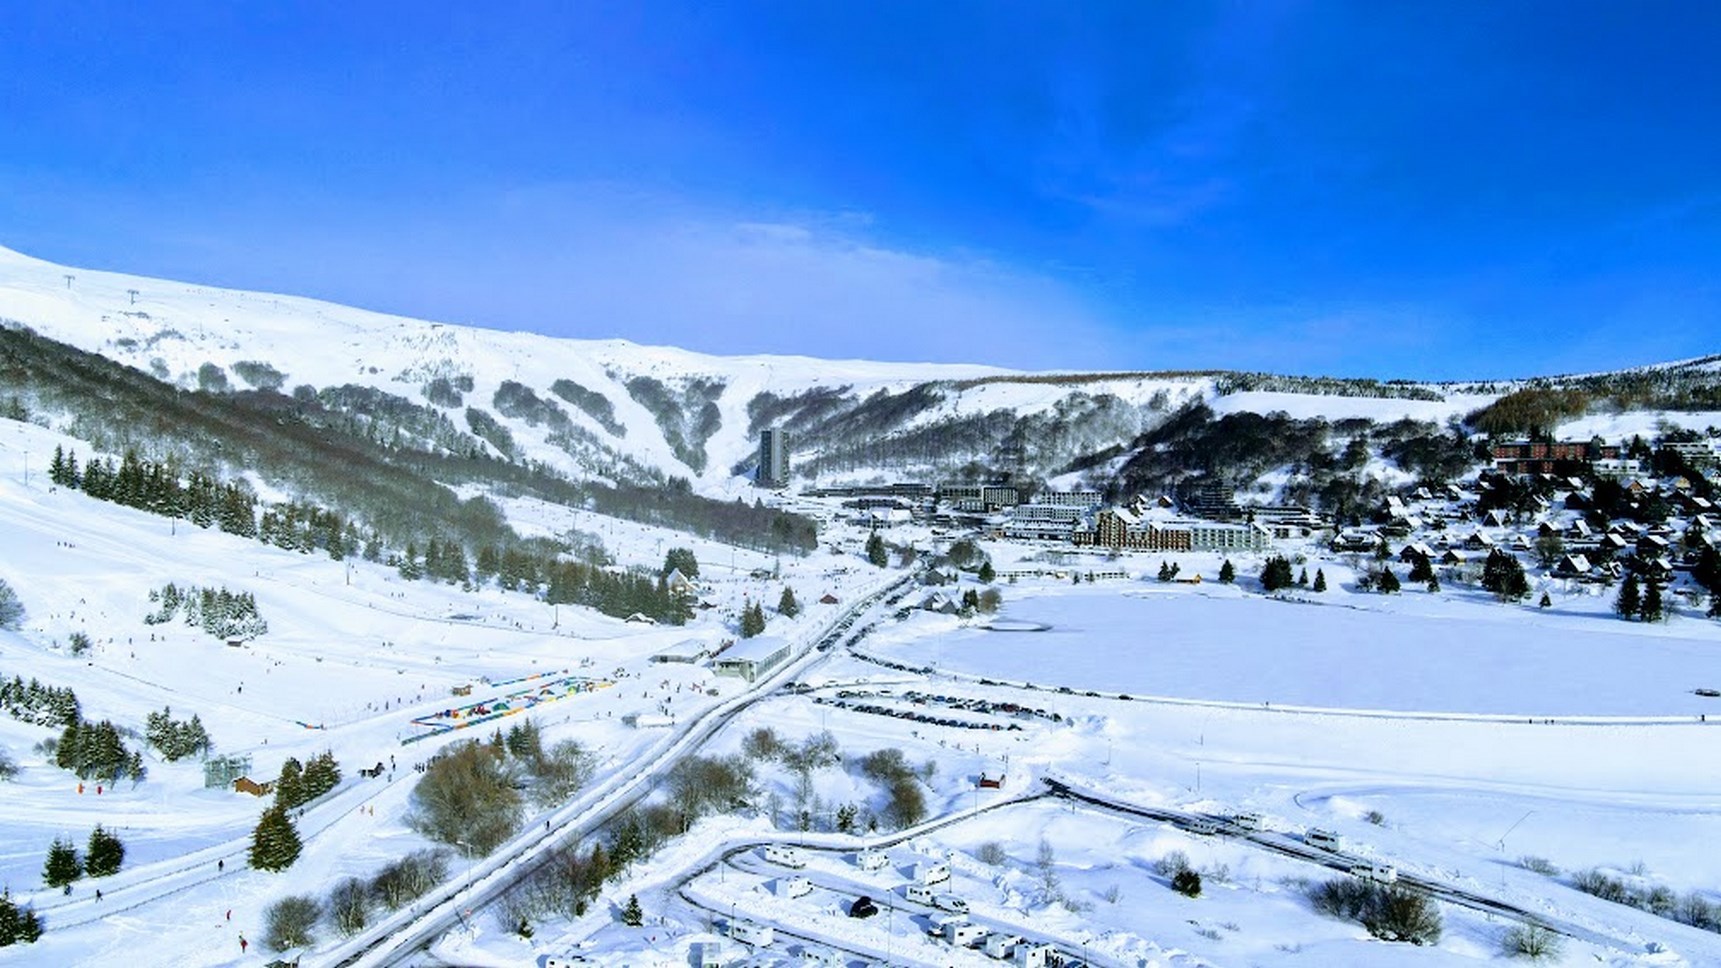 Wide panorama on the ski resort of Super Besse